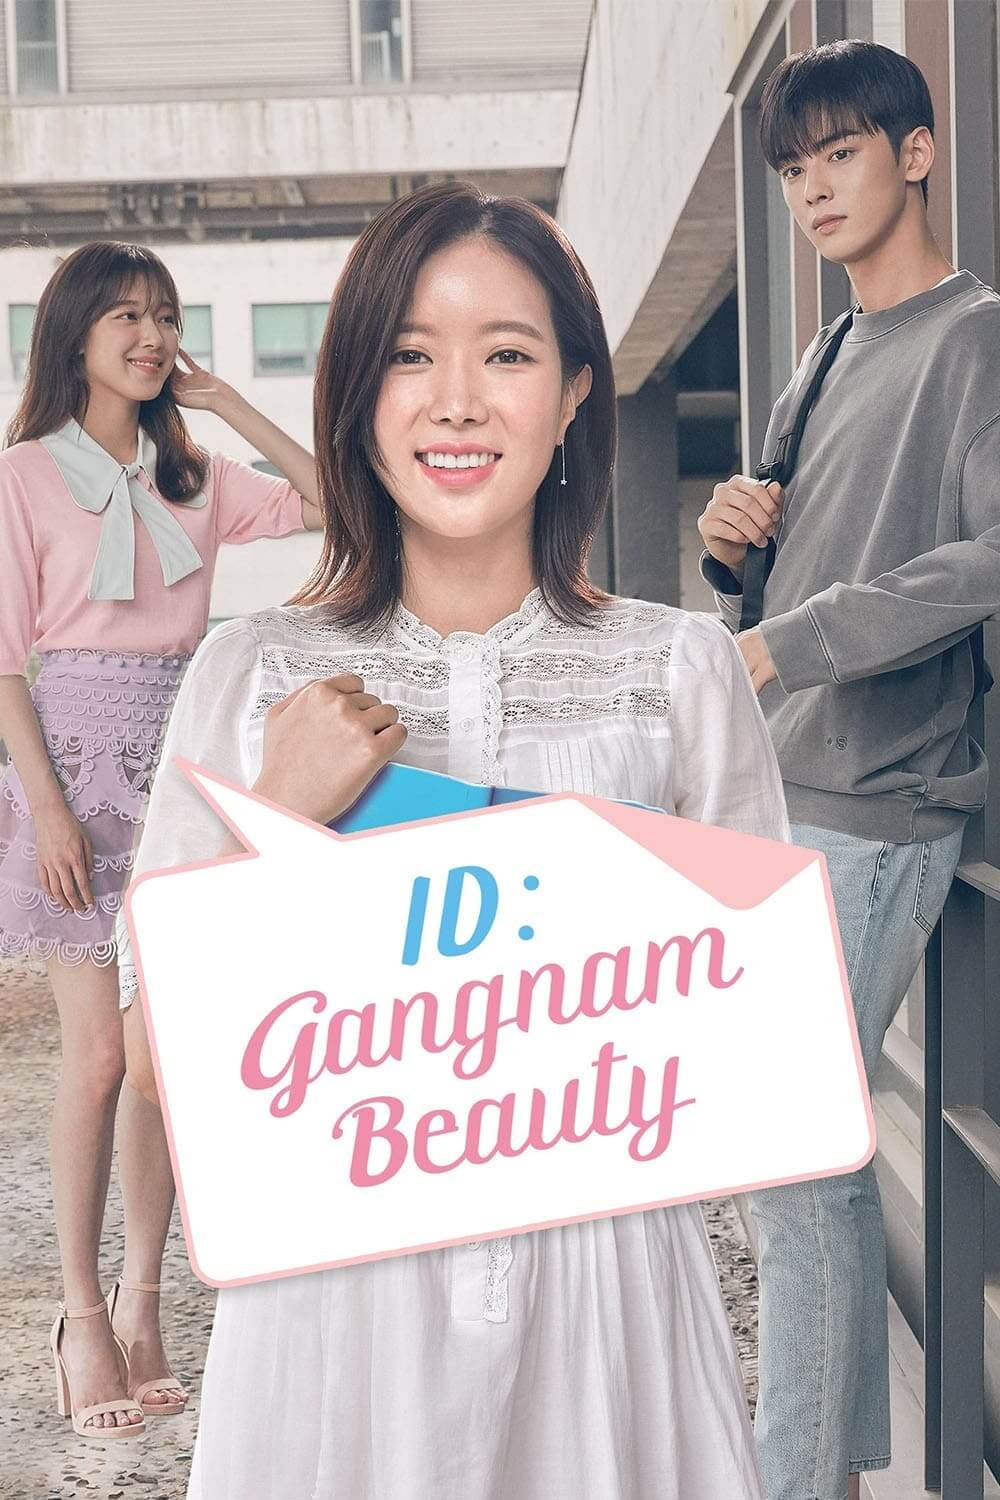 آیدی من خوشگل گانگنامه (My ID is Gangnam Beauty)